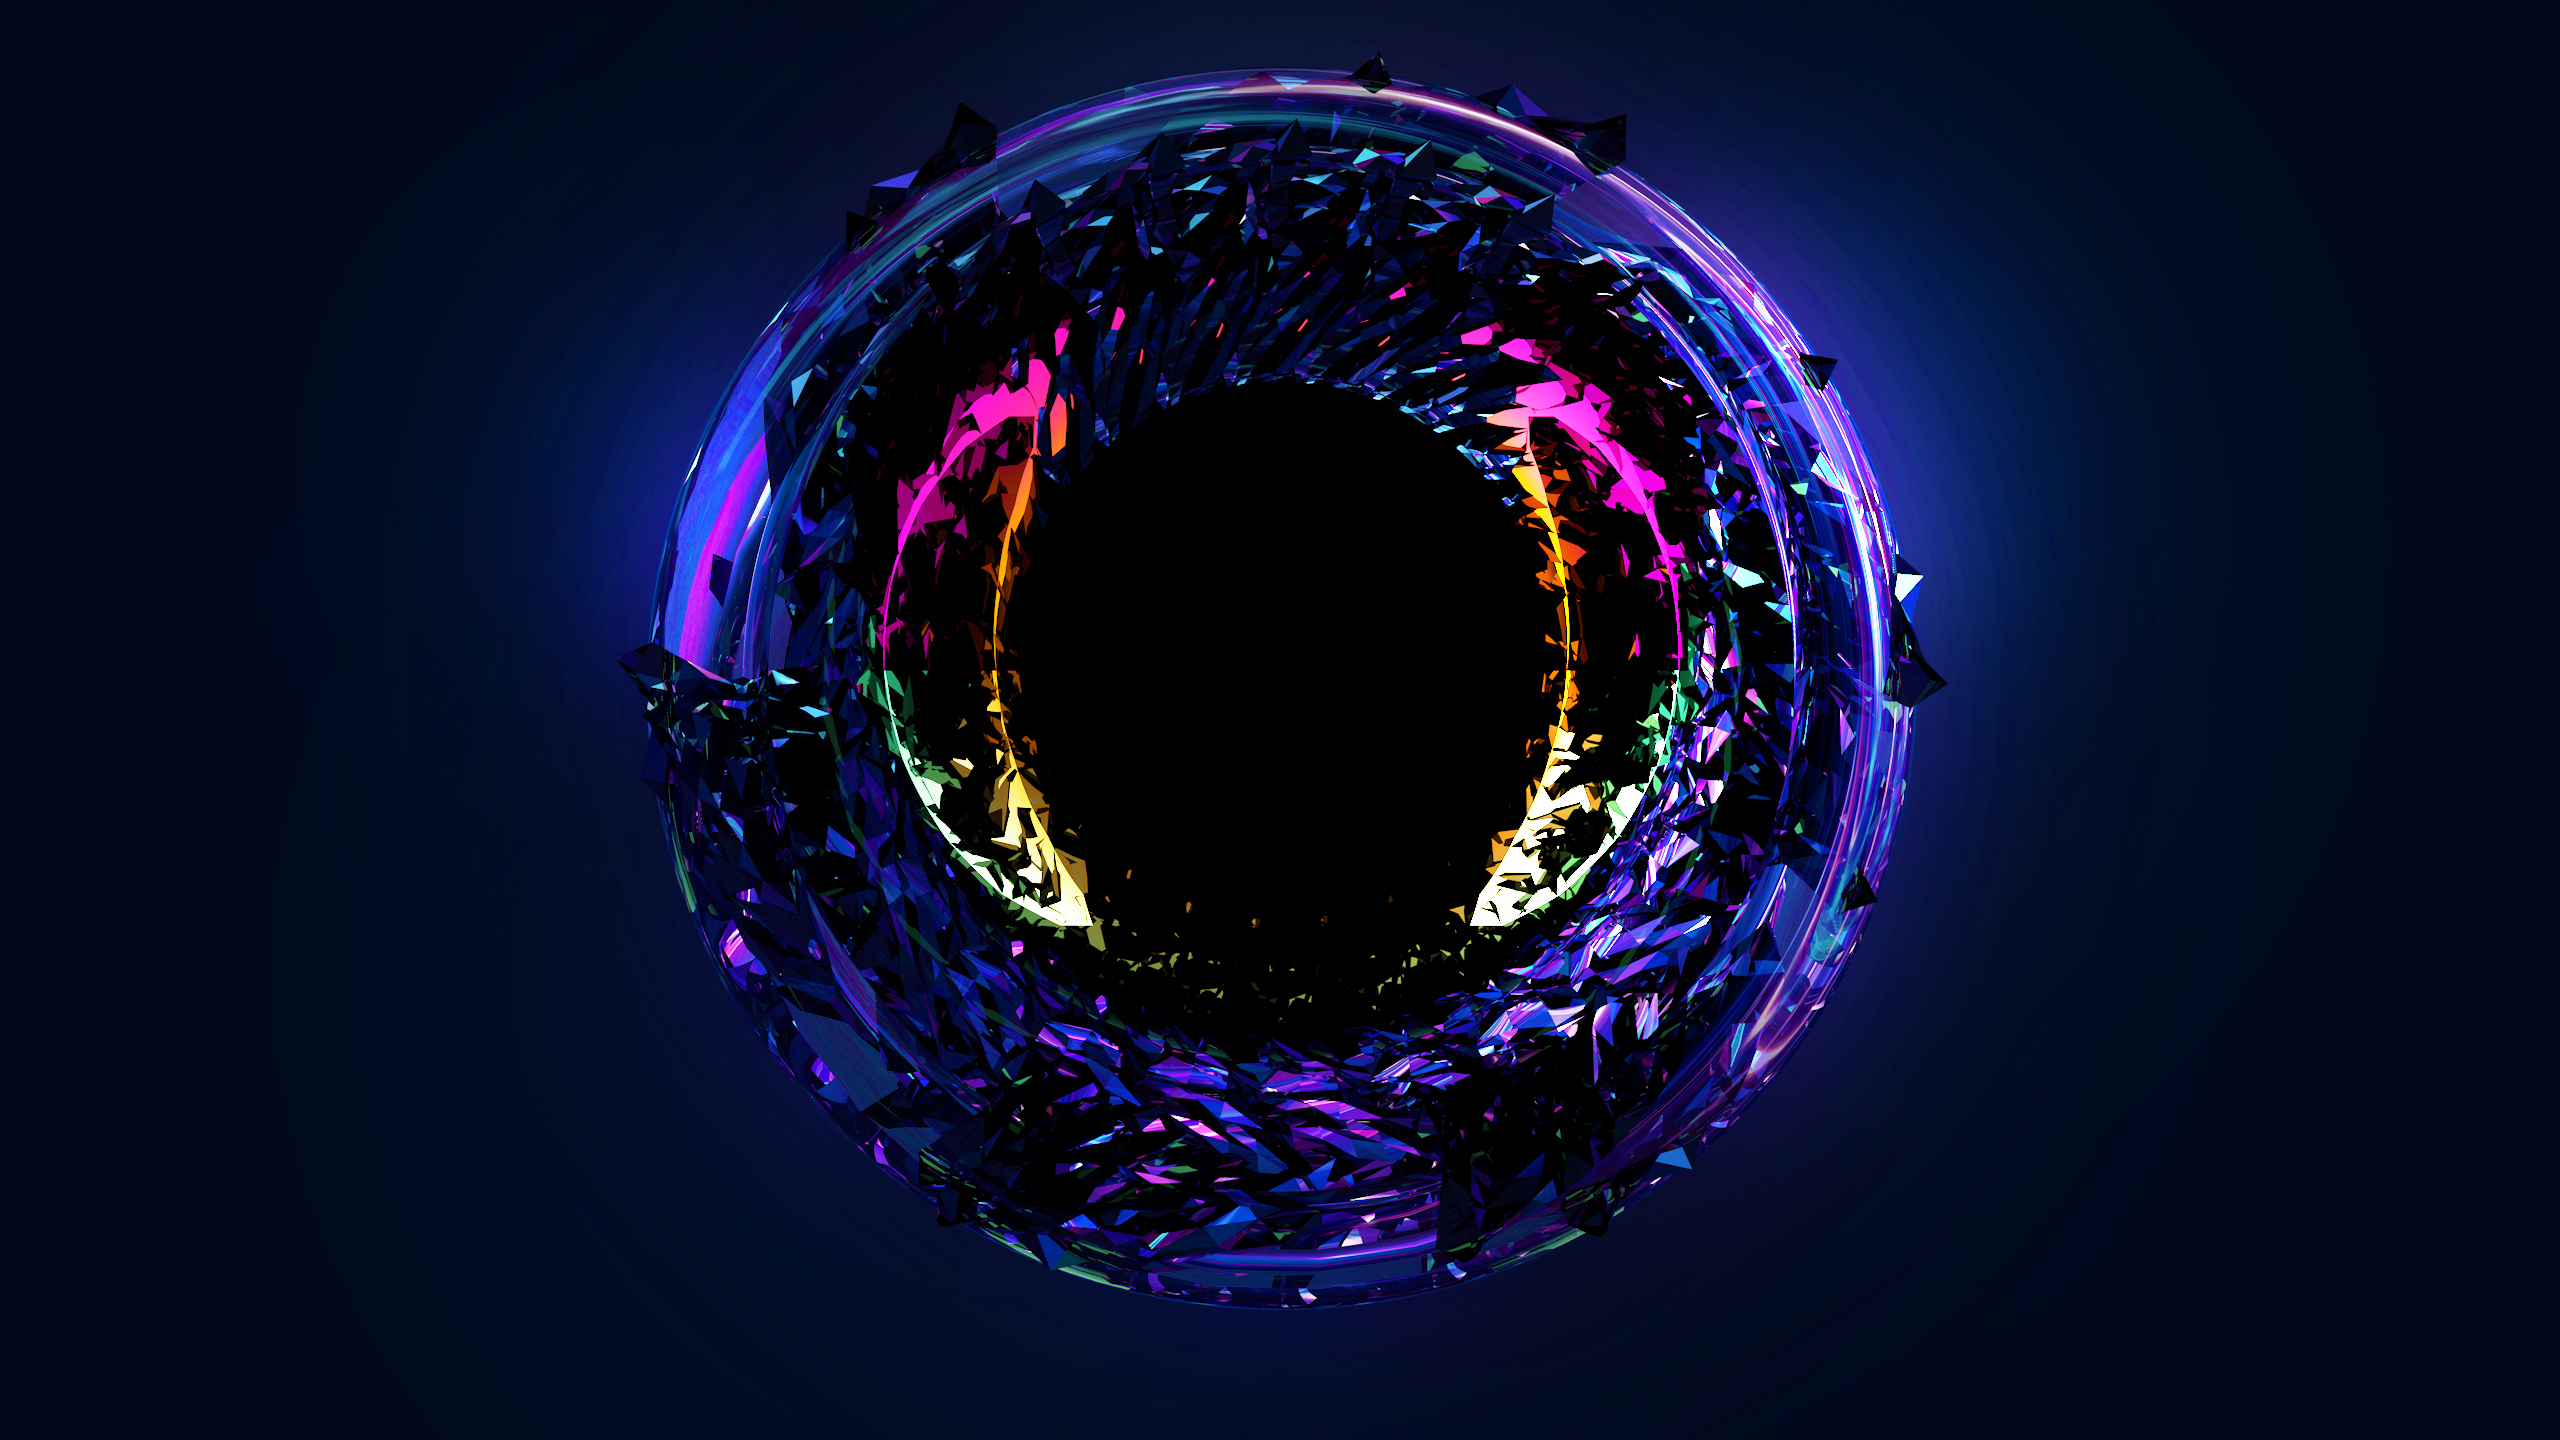 Abstract Neon Eye